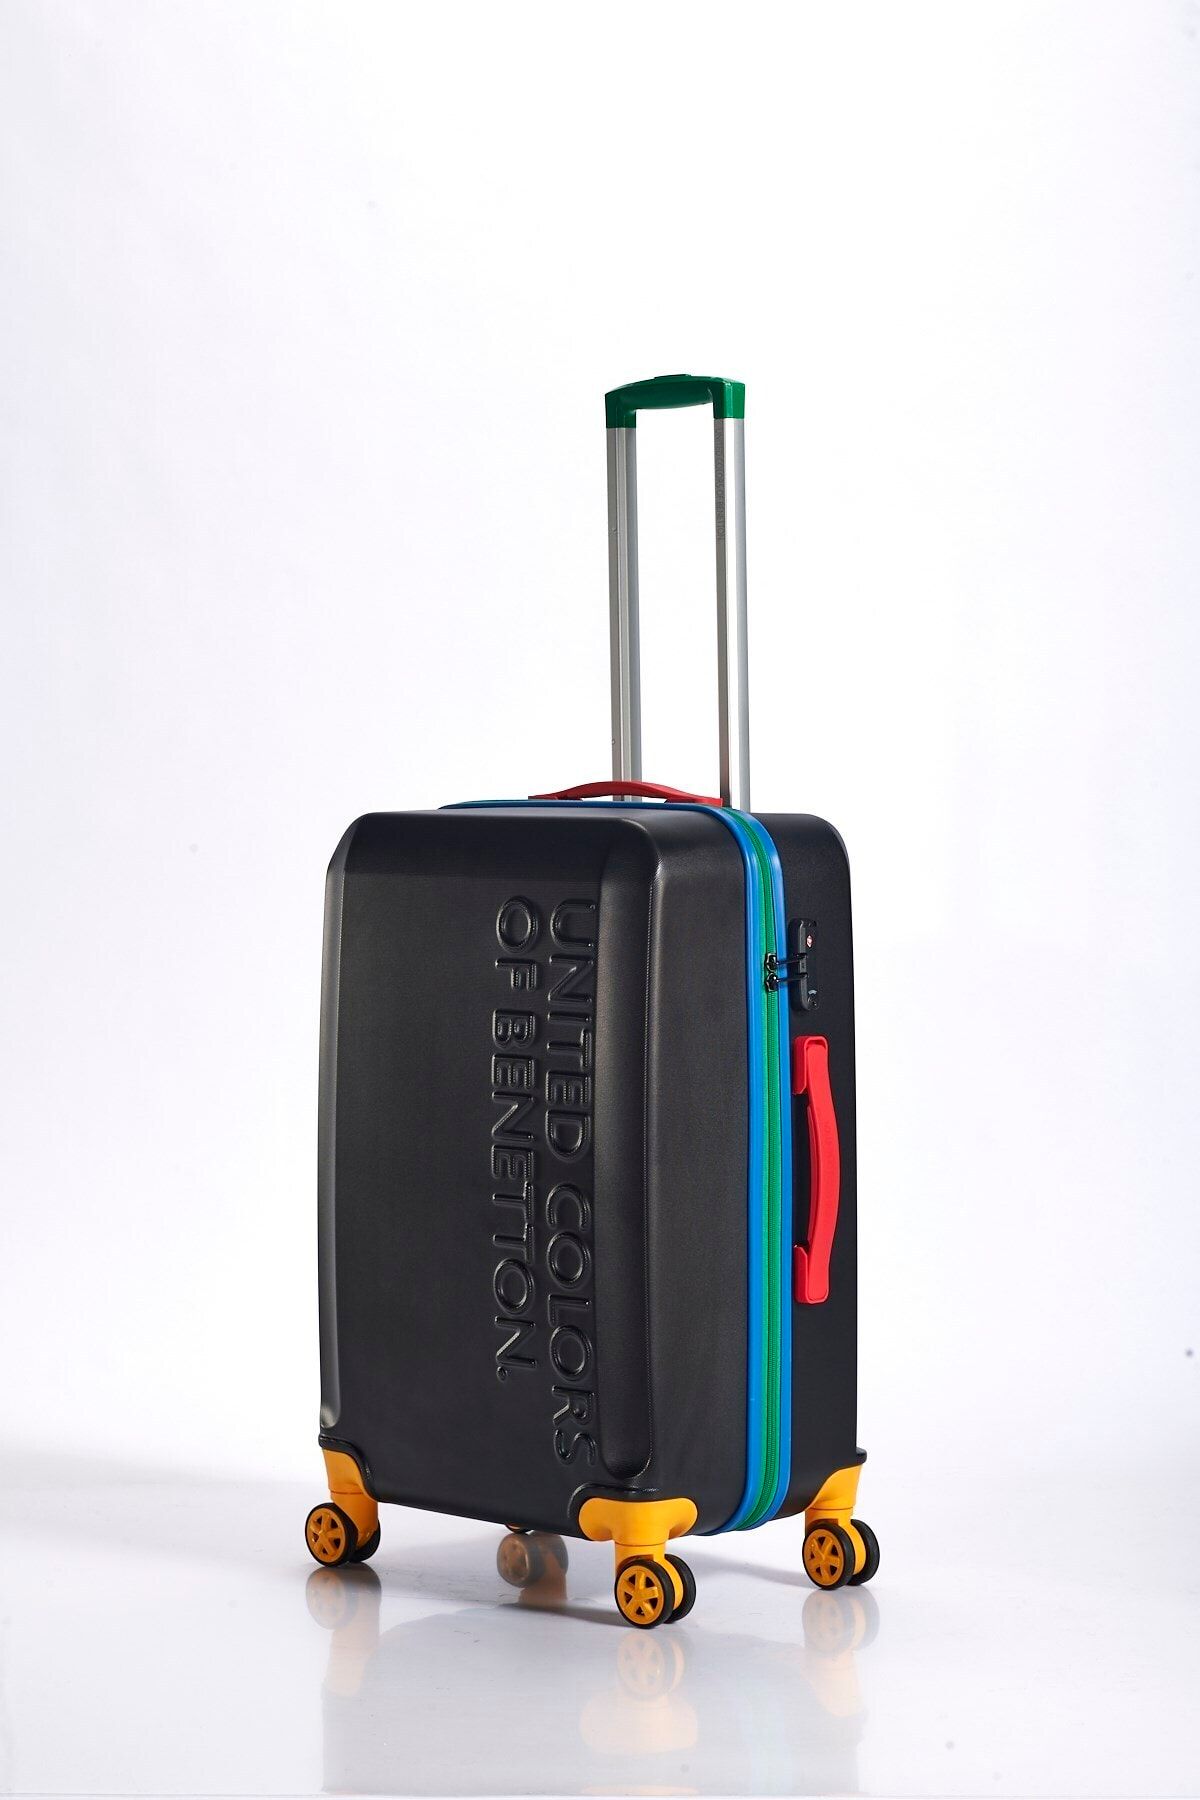 Benetton چمدان شکمی Bnta203x مشکی سایز متوسط ​​BNTA203X-مشکی-24